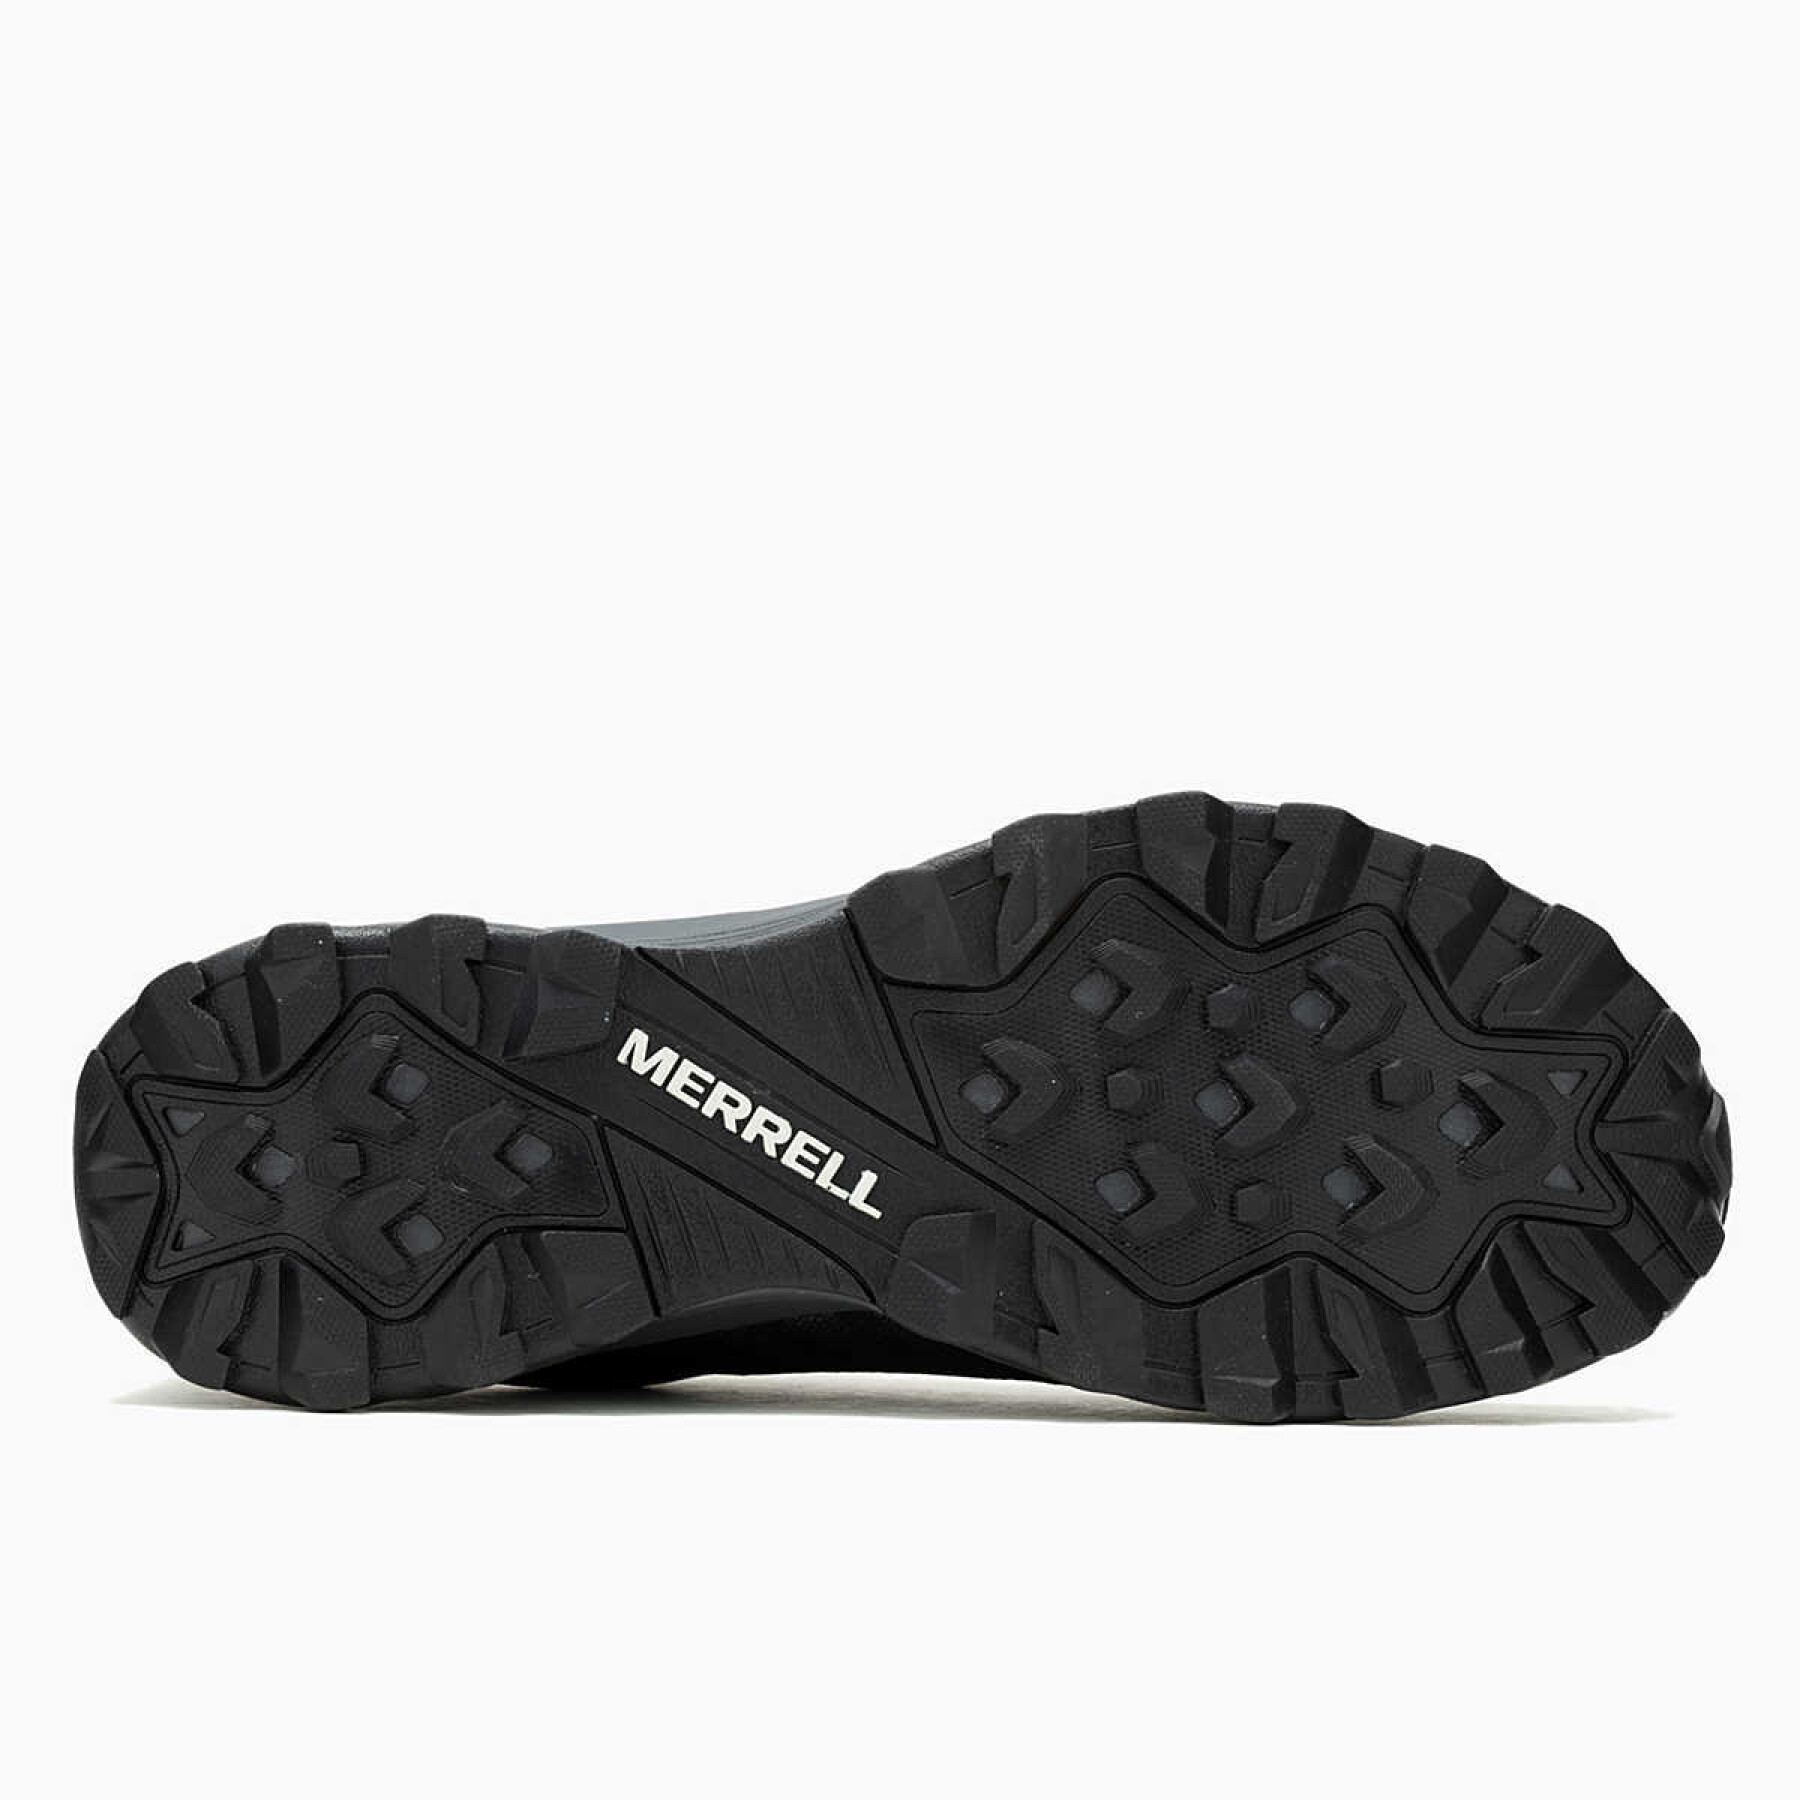 Hiking shoes Merrell Speed Eco Waterproof